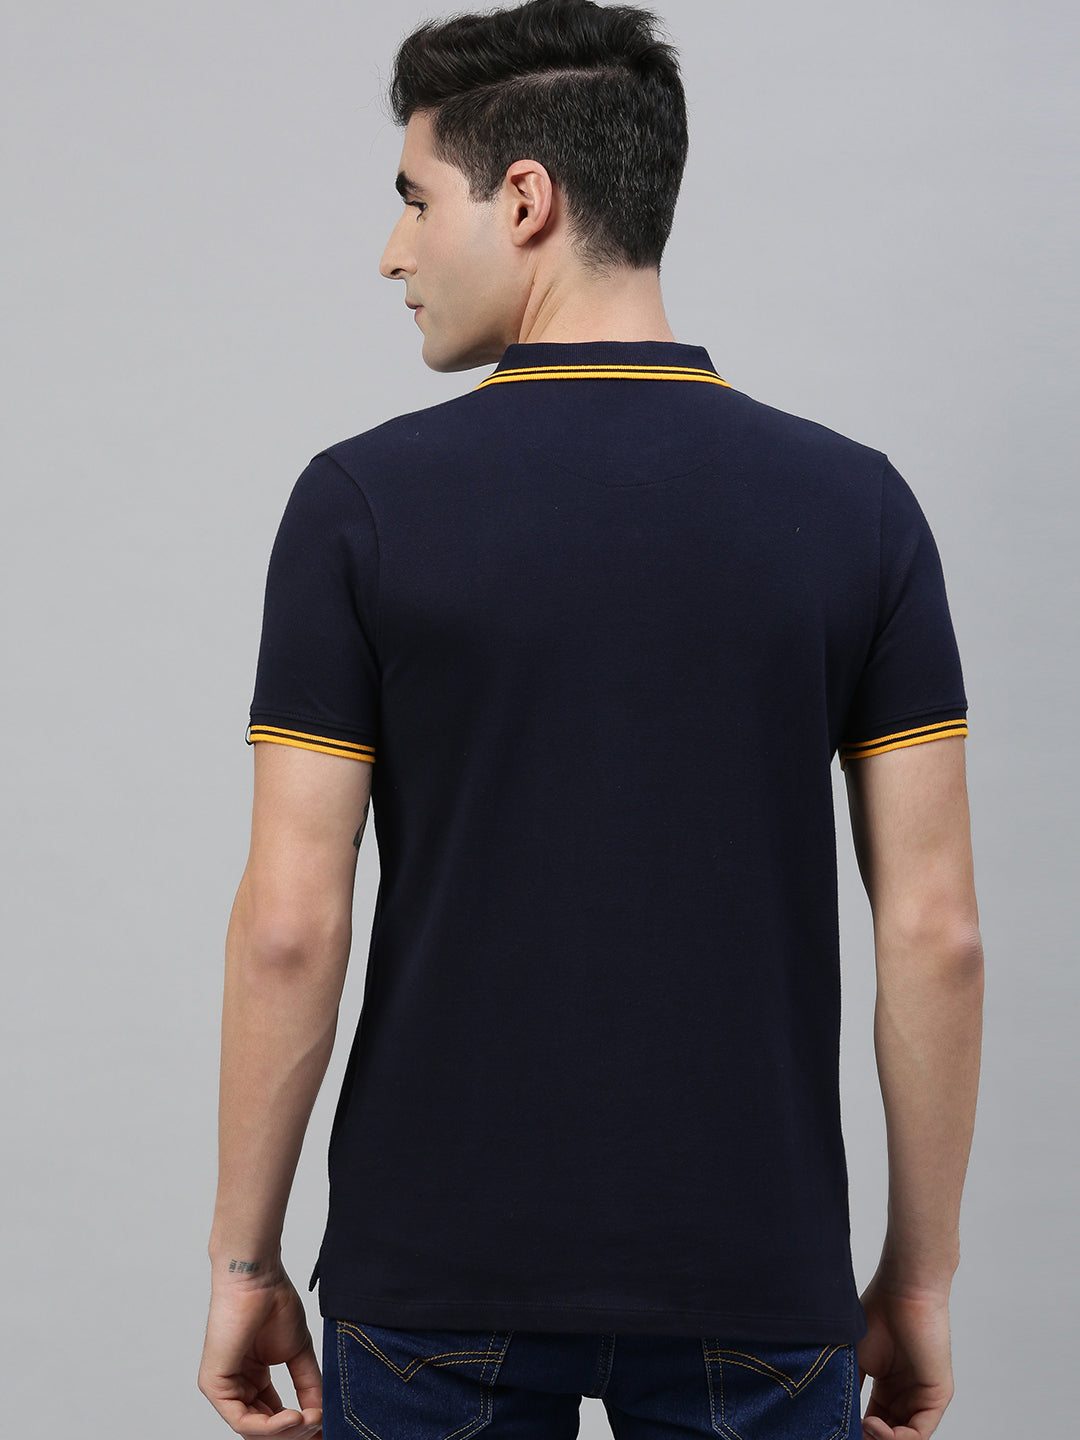 Men's Navy Blue Solid Cotton Slim Fit Polo T-Shirt